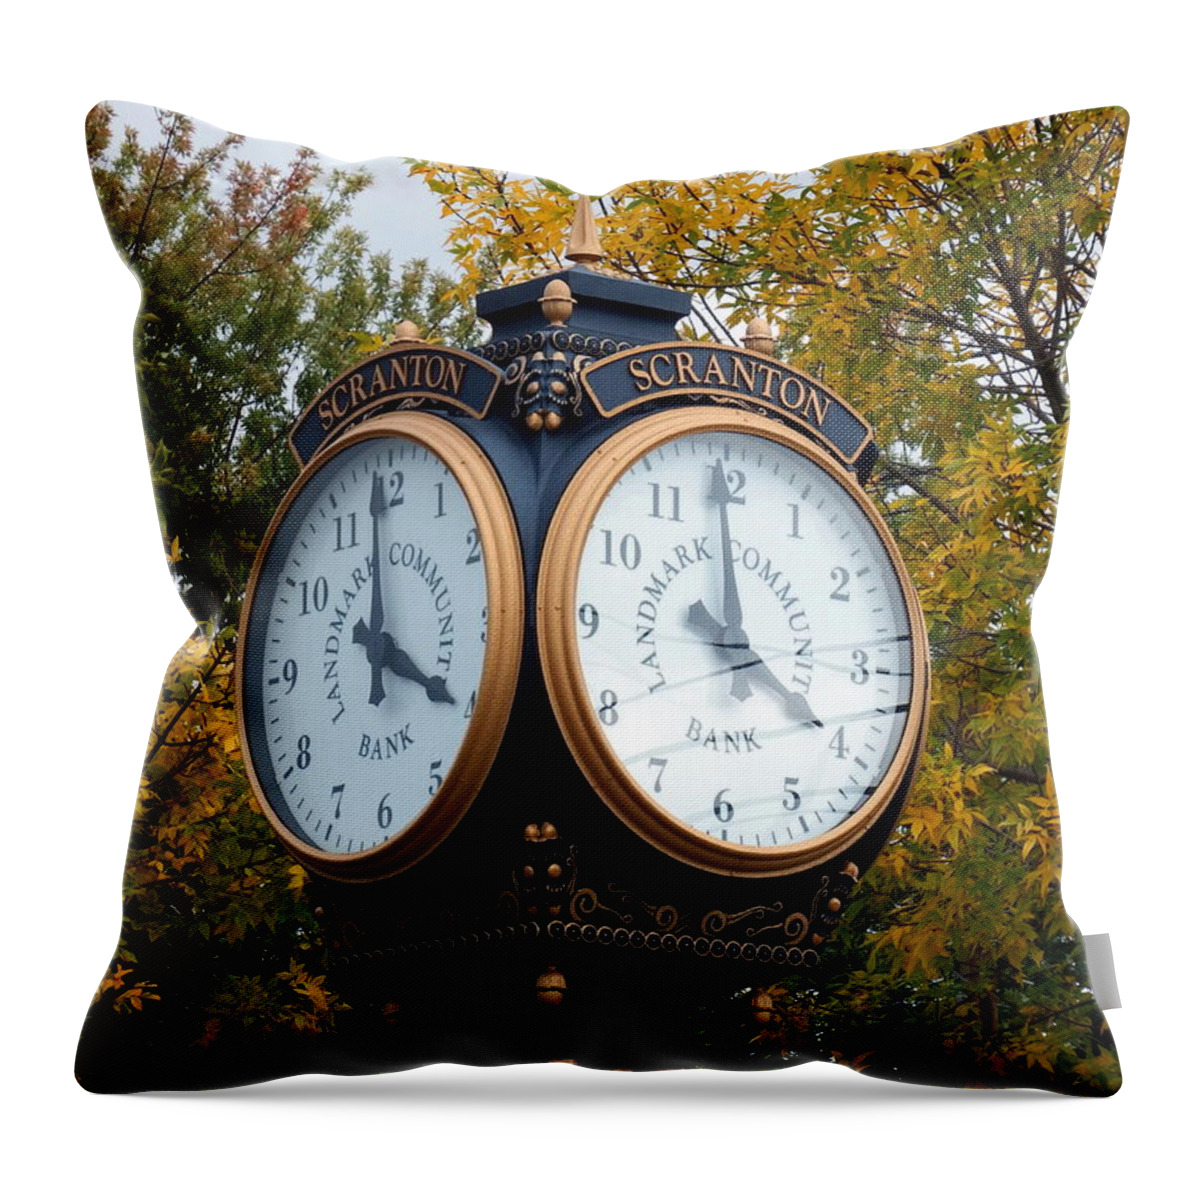 Scranton Throw Pillow featuring the photograph Scranton Landmark Street Clock by Janine Riley